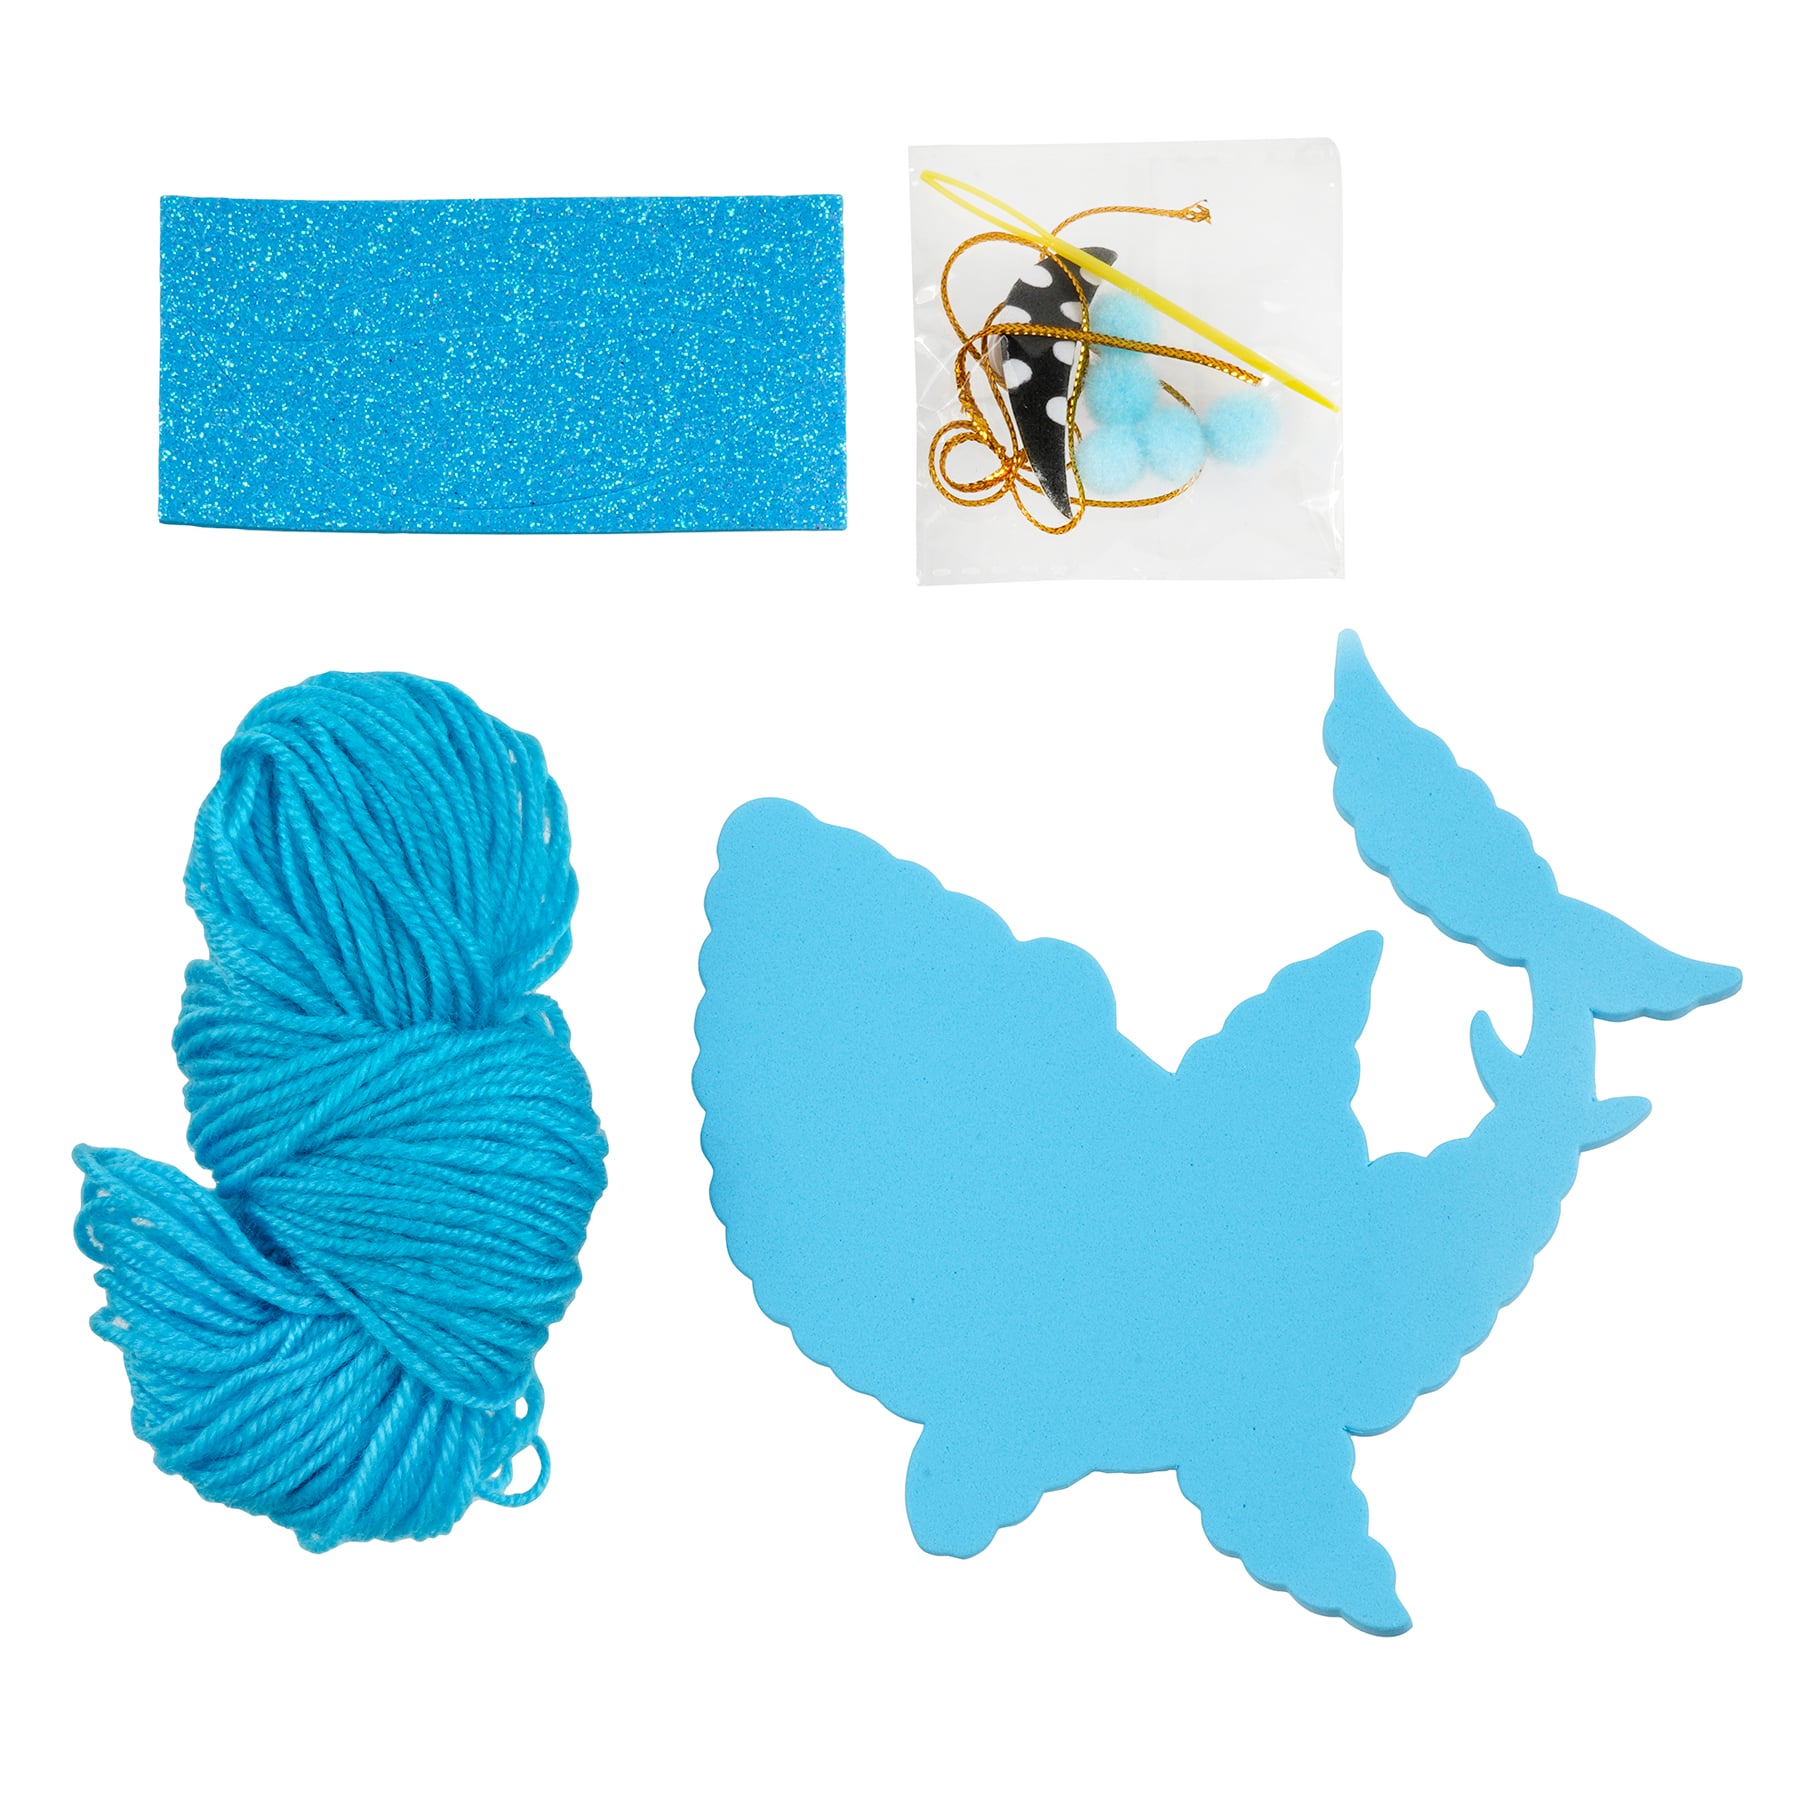 Shark Yarn Wrapping Kit by Creatology&#x2122;